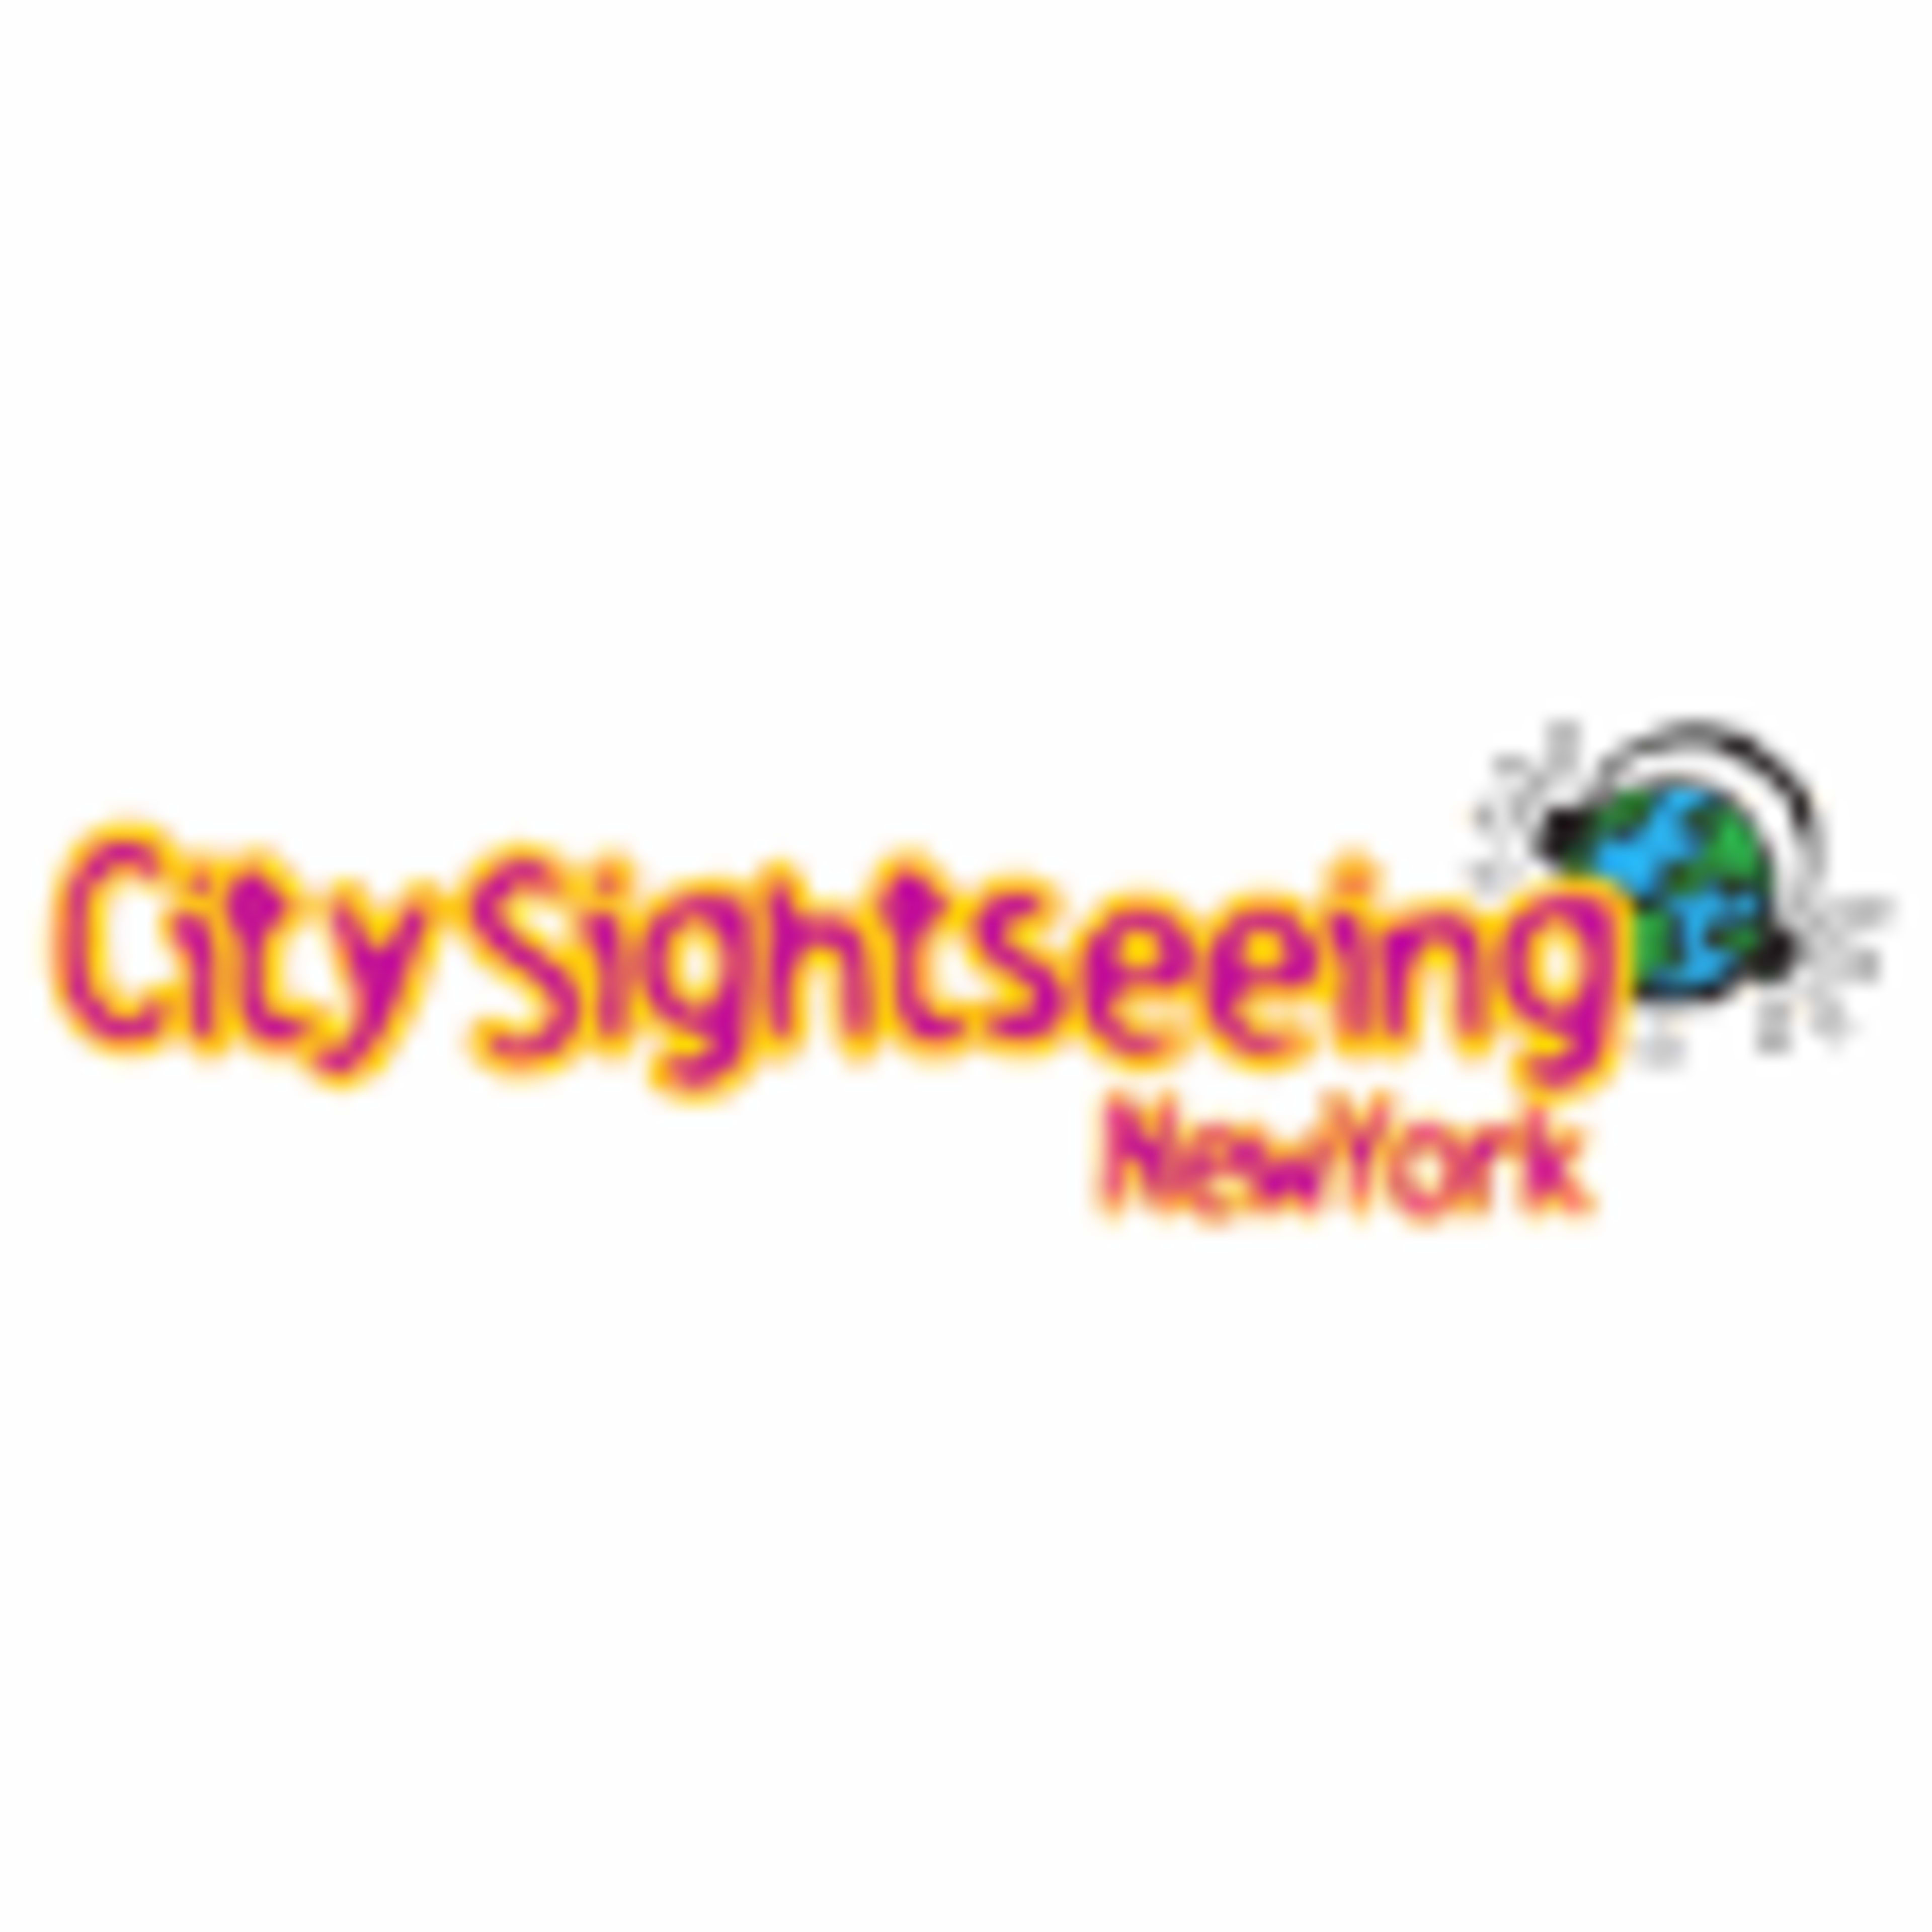 City Sightseeing New YorkCode